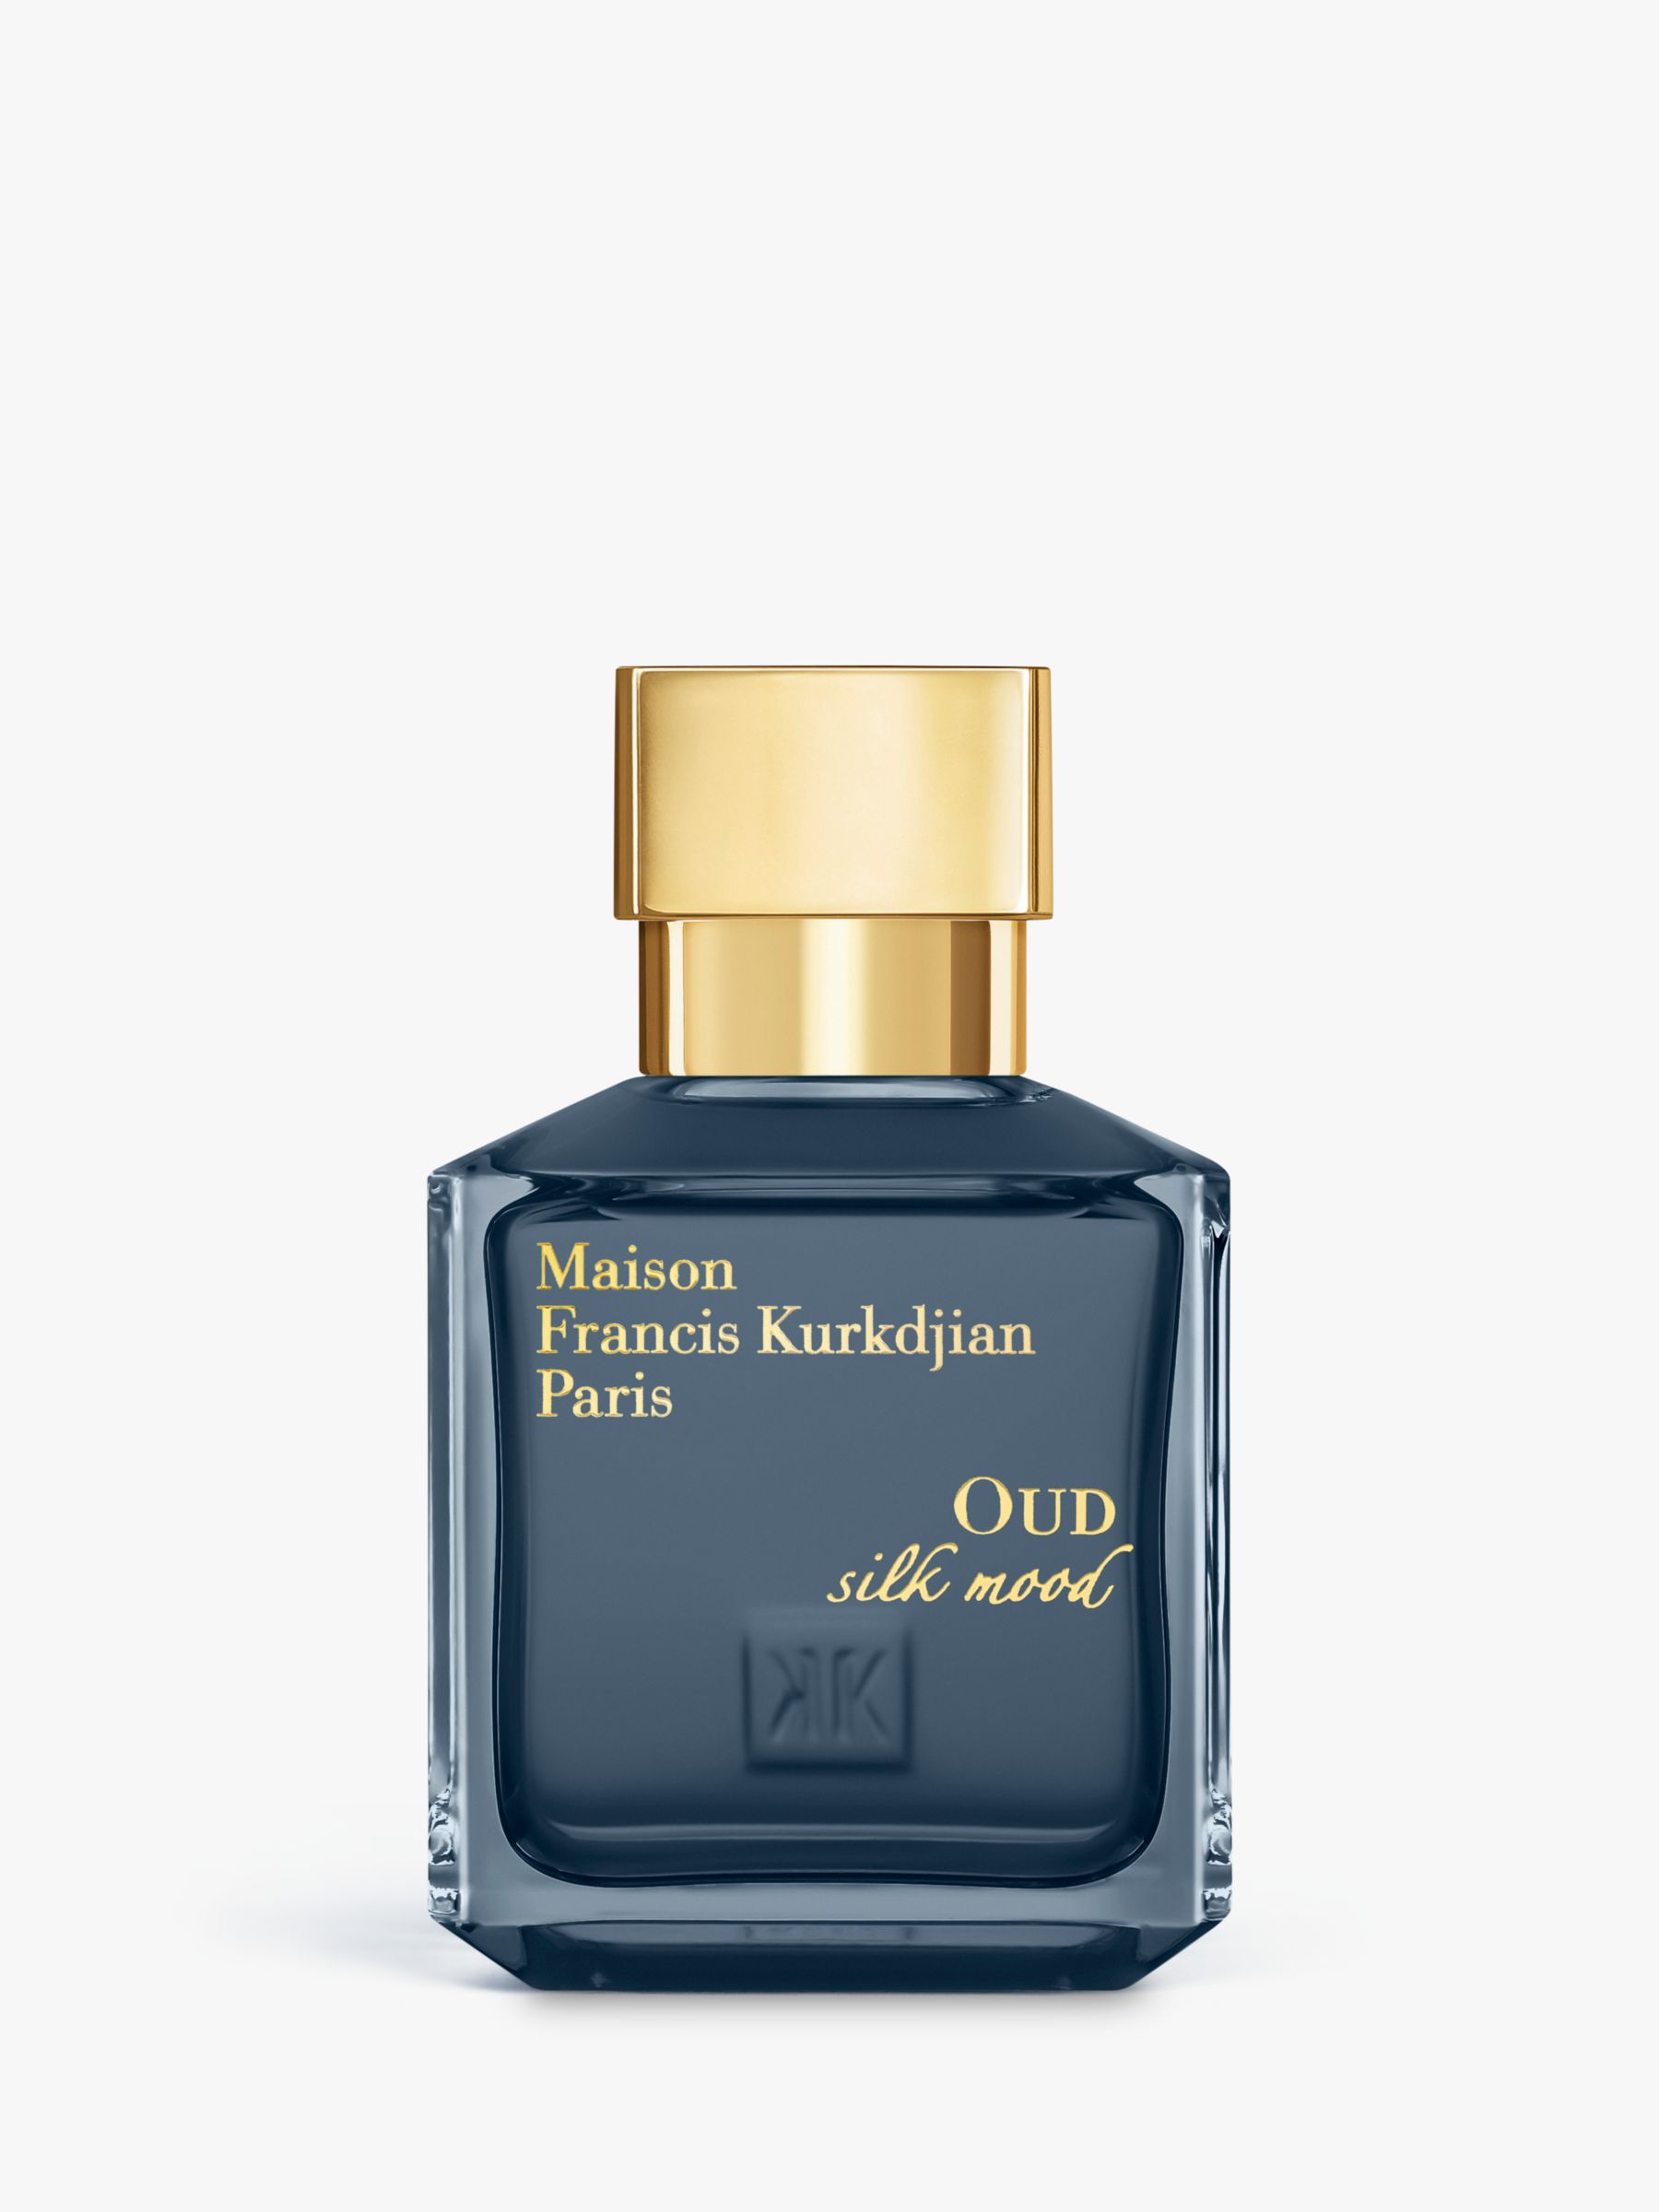 Maison Francis Kurkdjian Oud Silk Mood Eau de Parfum, 70ml 1